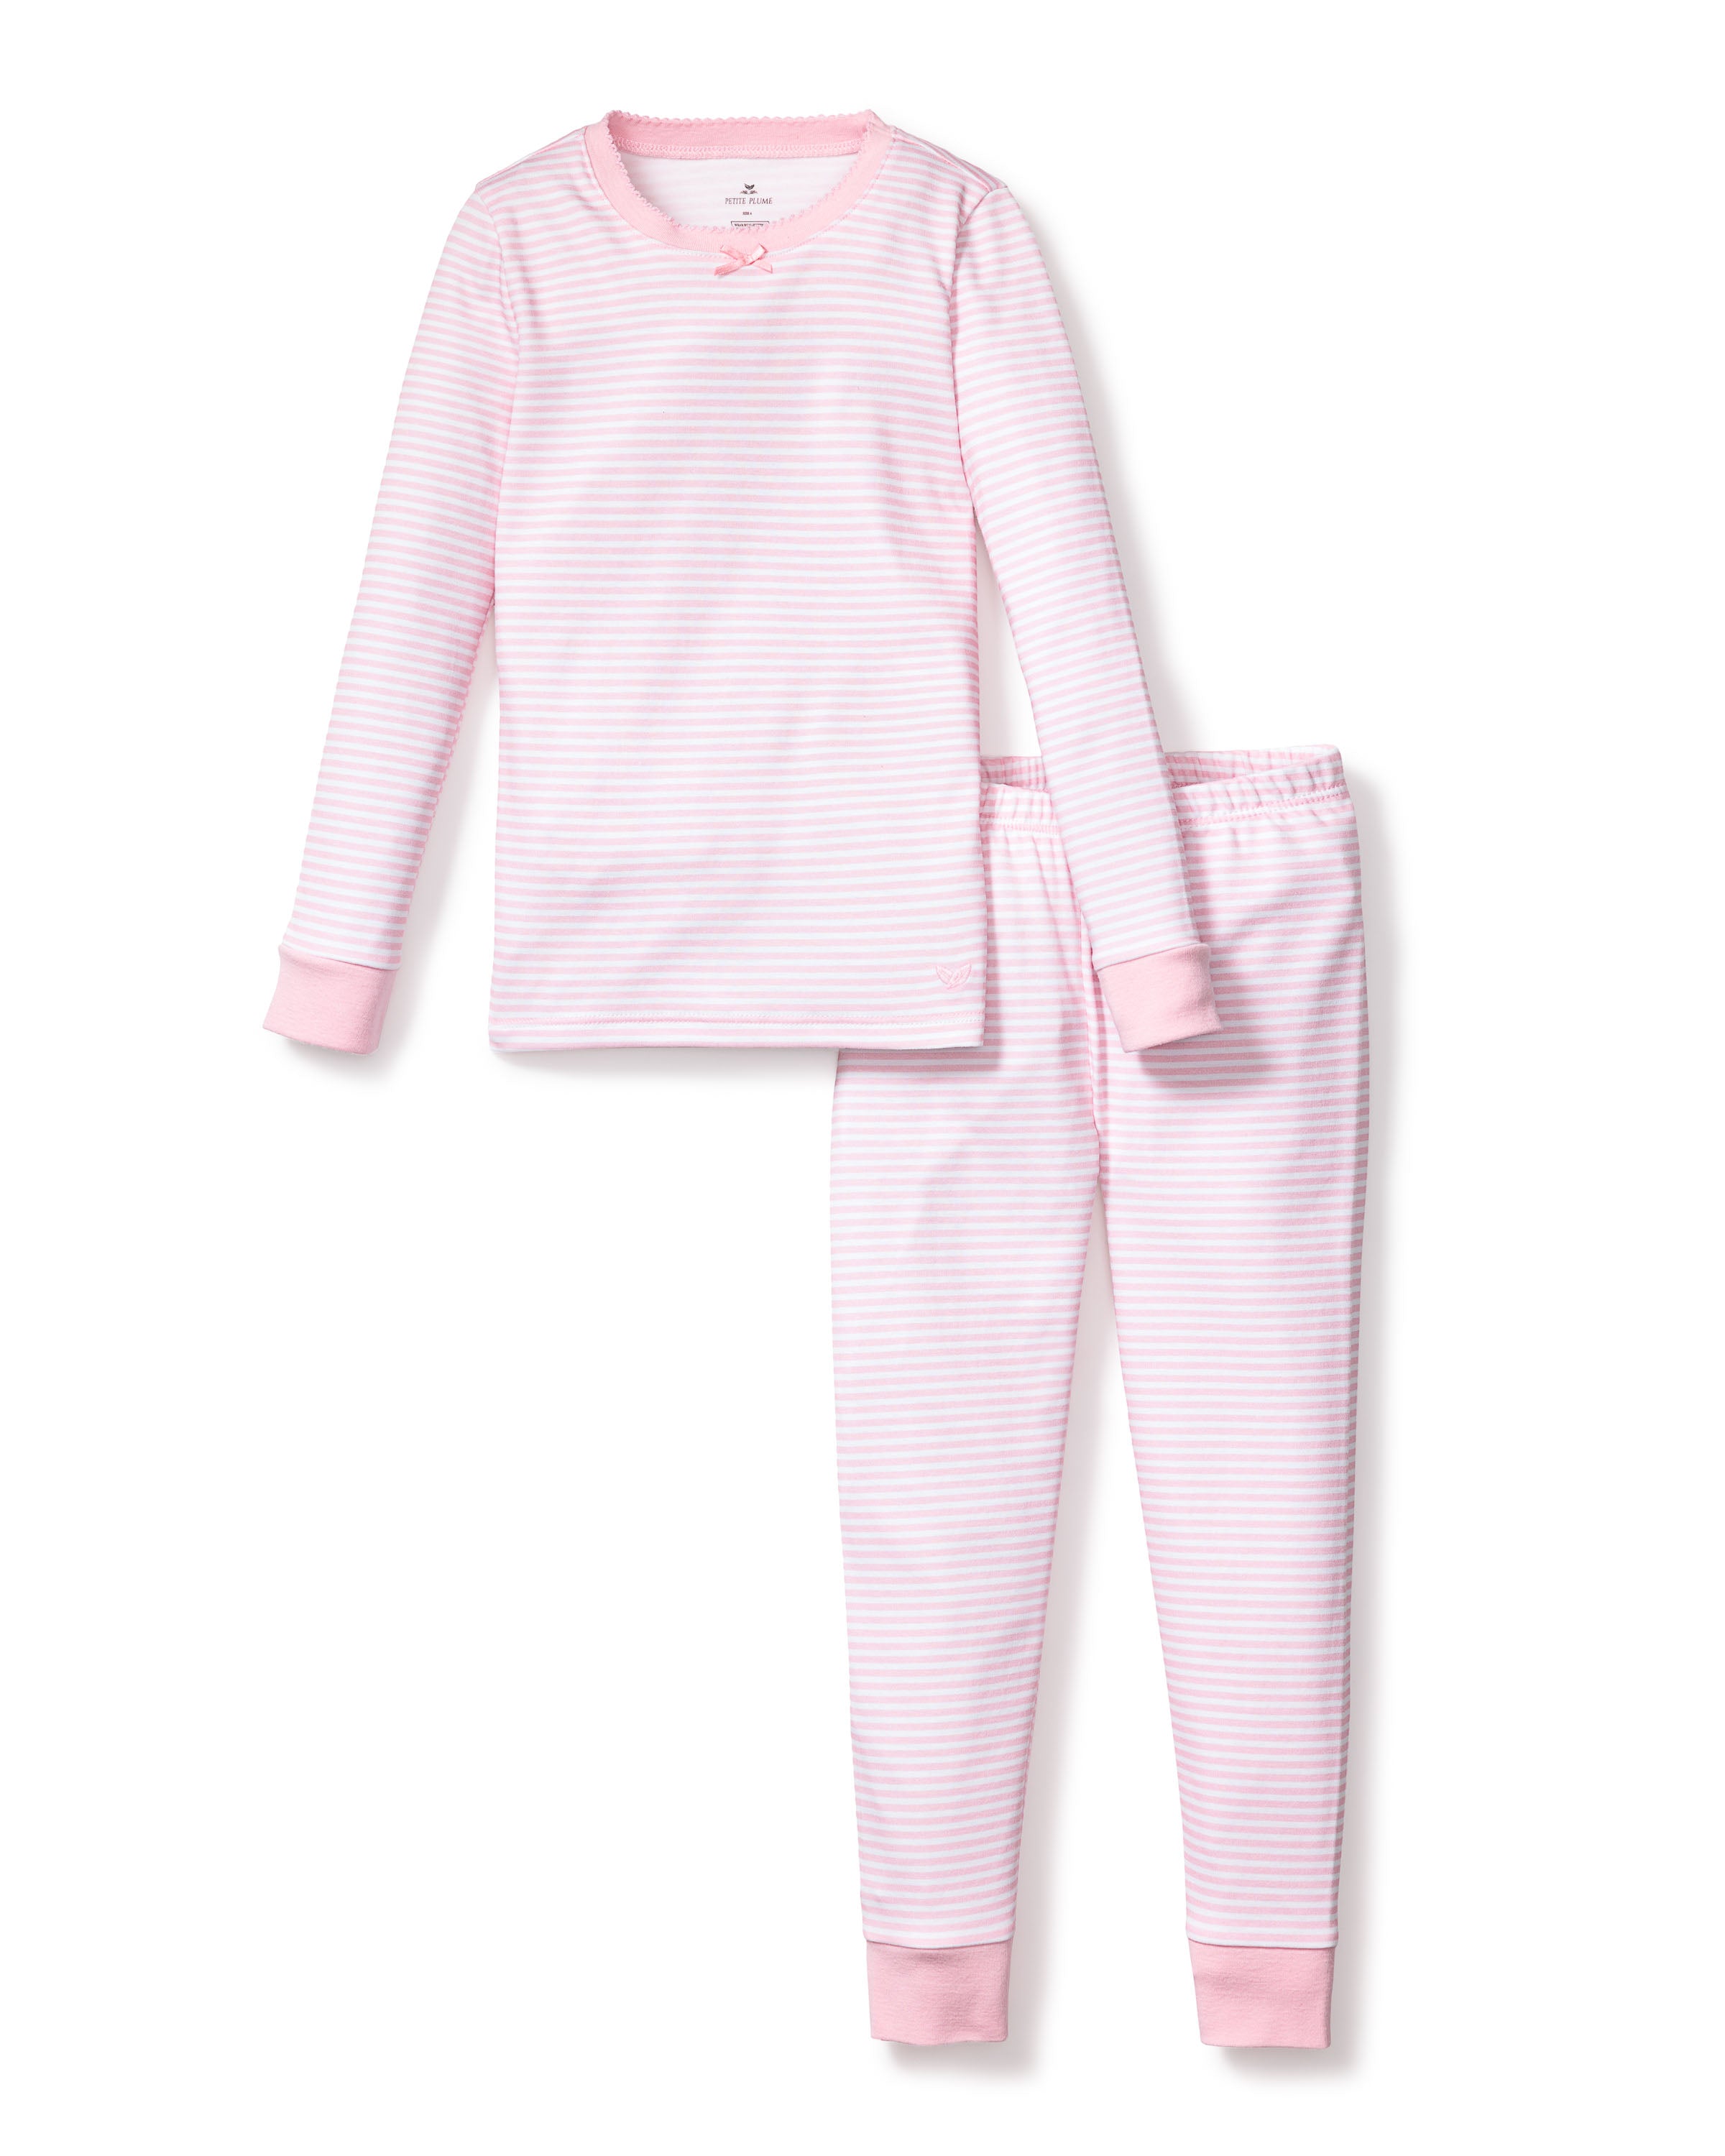 Kid's Pima Snug Fit Pajama Set in Pink Stripes